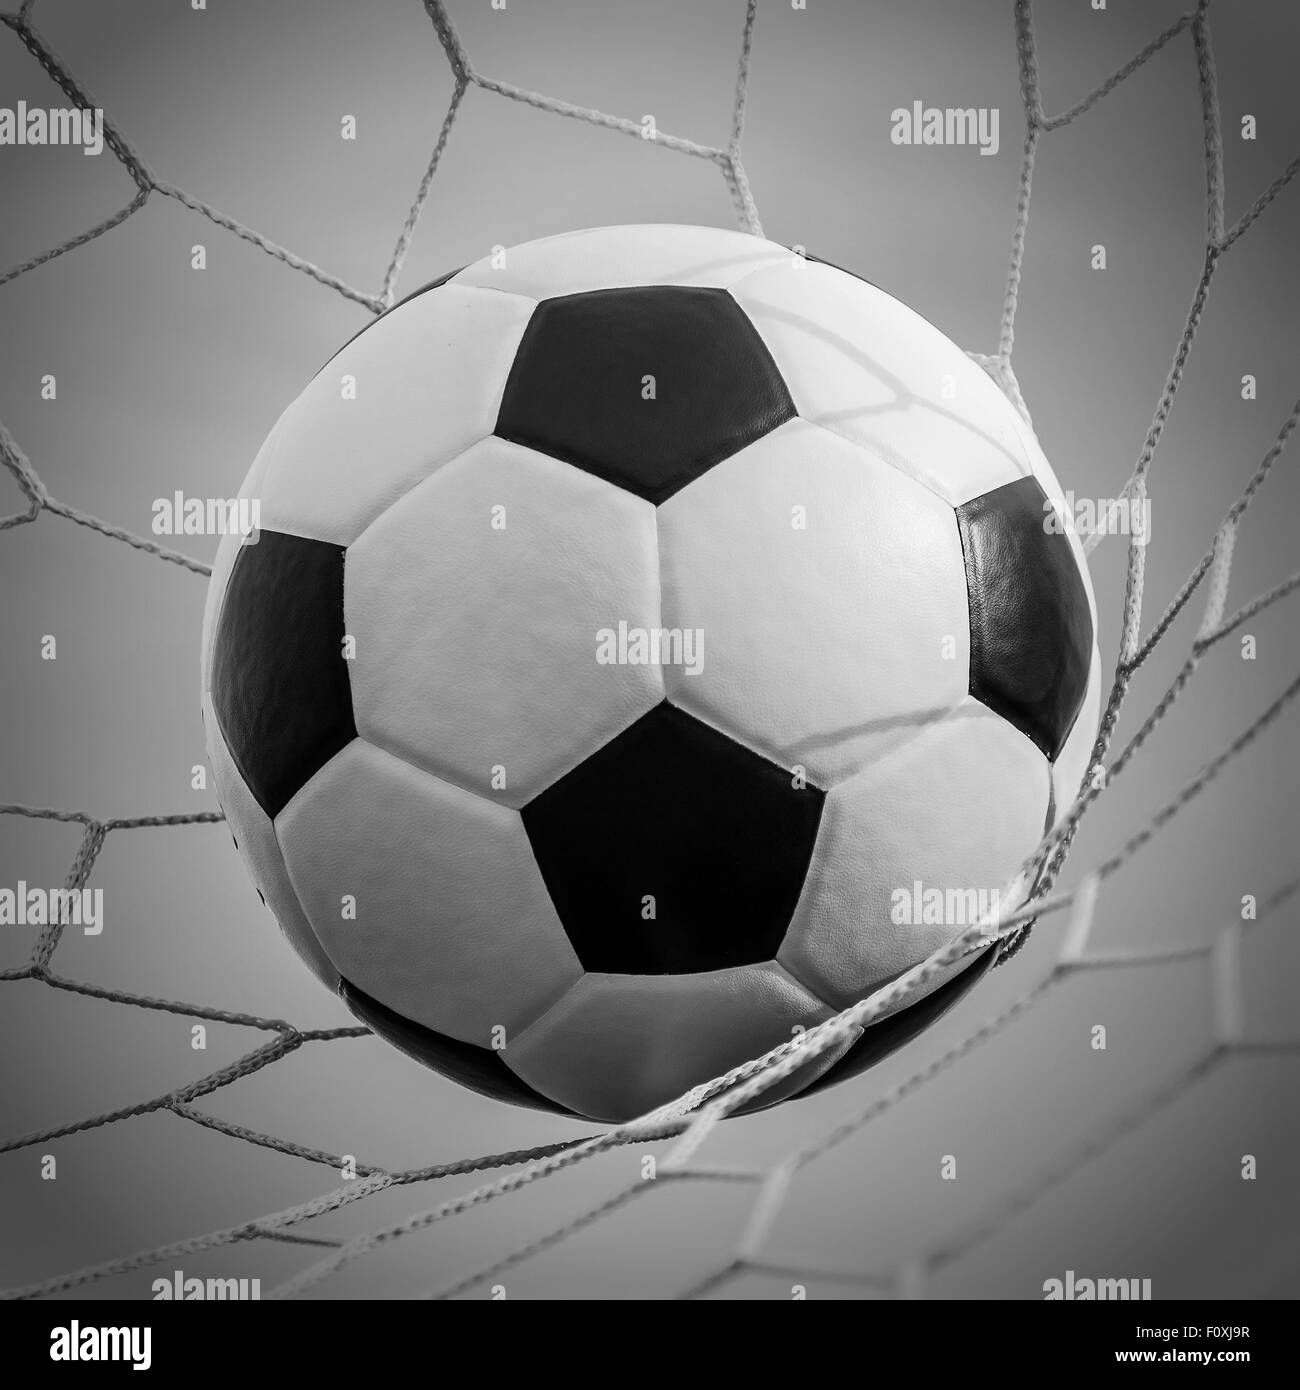 soccer goal photography